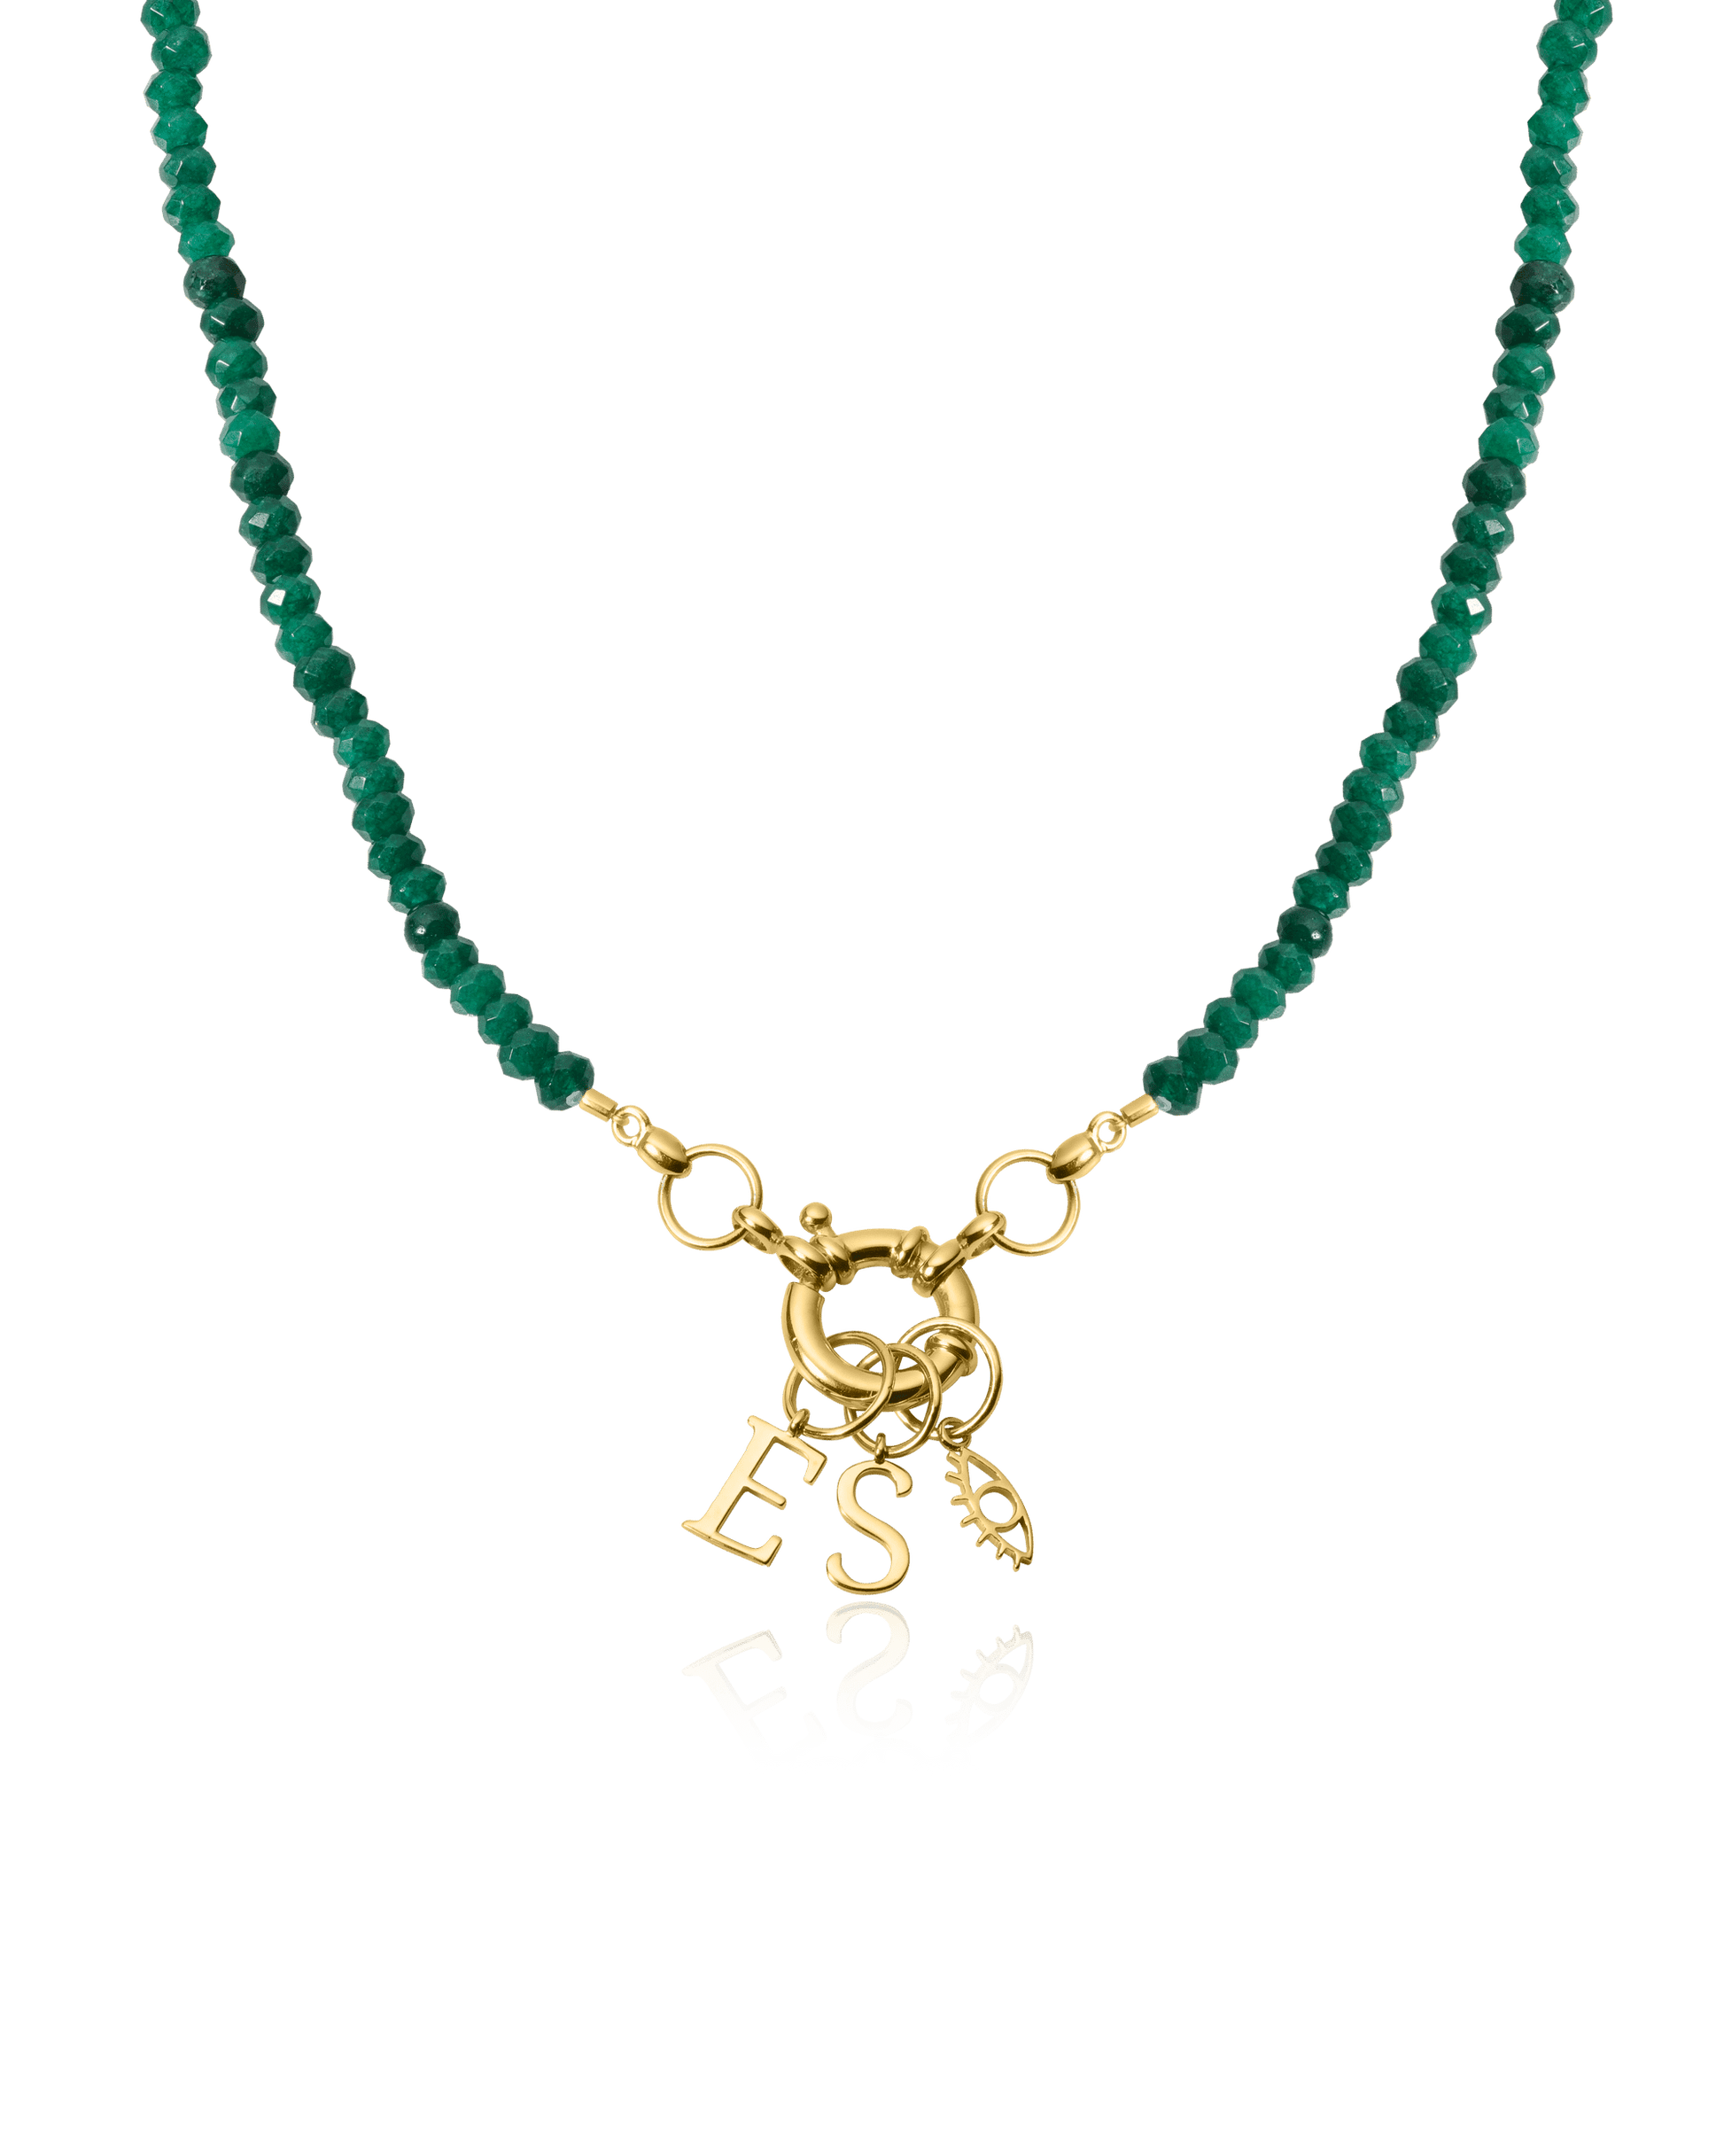 Black Spinnel Charm Lock Necklace - 18K Gold Vermeil Necklaces magal-dev Green Jade Gemstones 1 Charm 16"